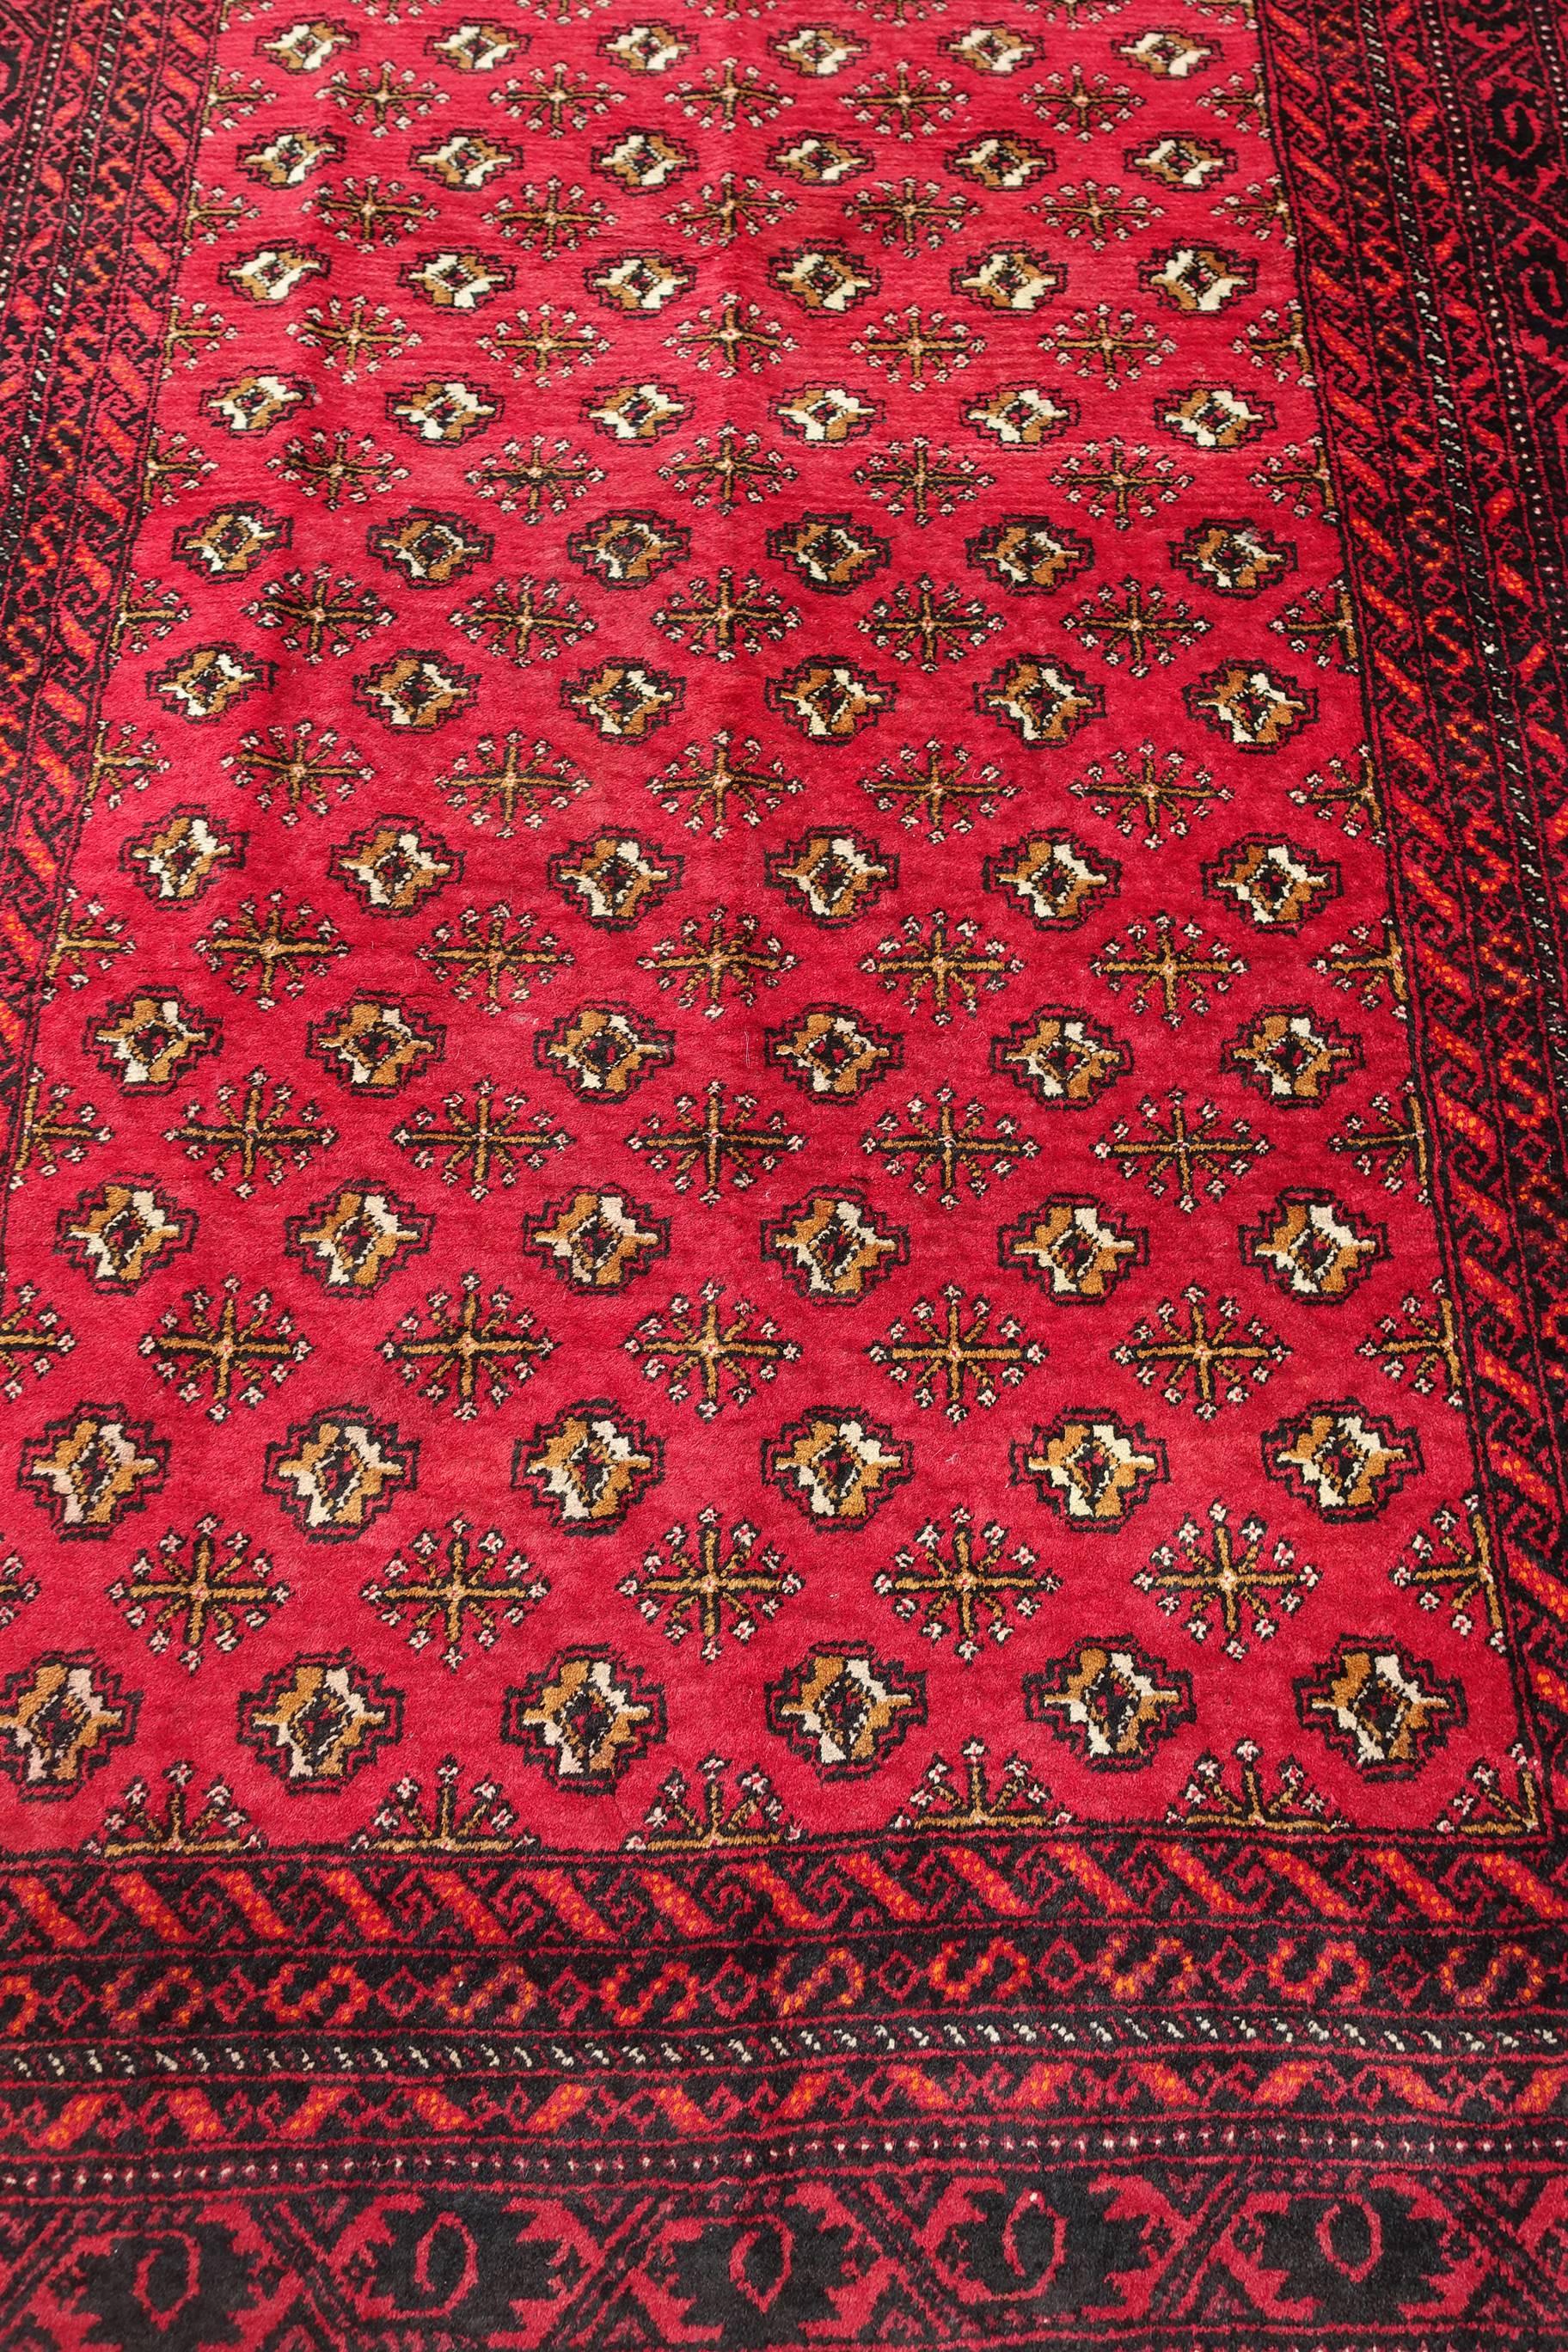 Hand-Knotted Vintage Persian Tekke Carpet in Kork Wool and Goat Hair